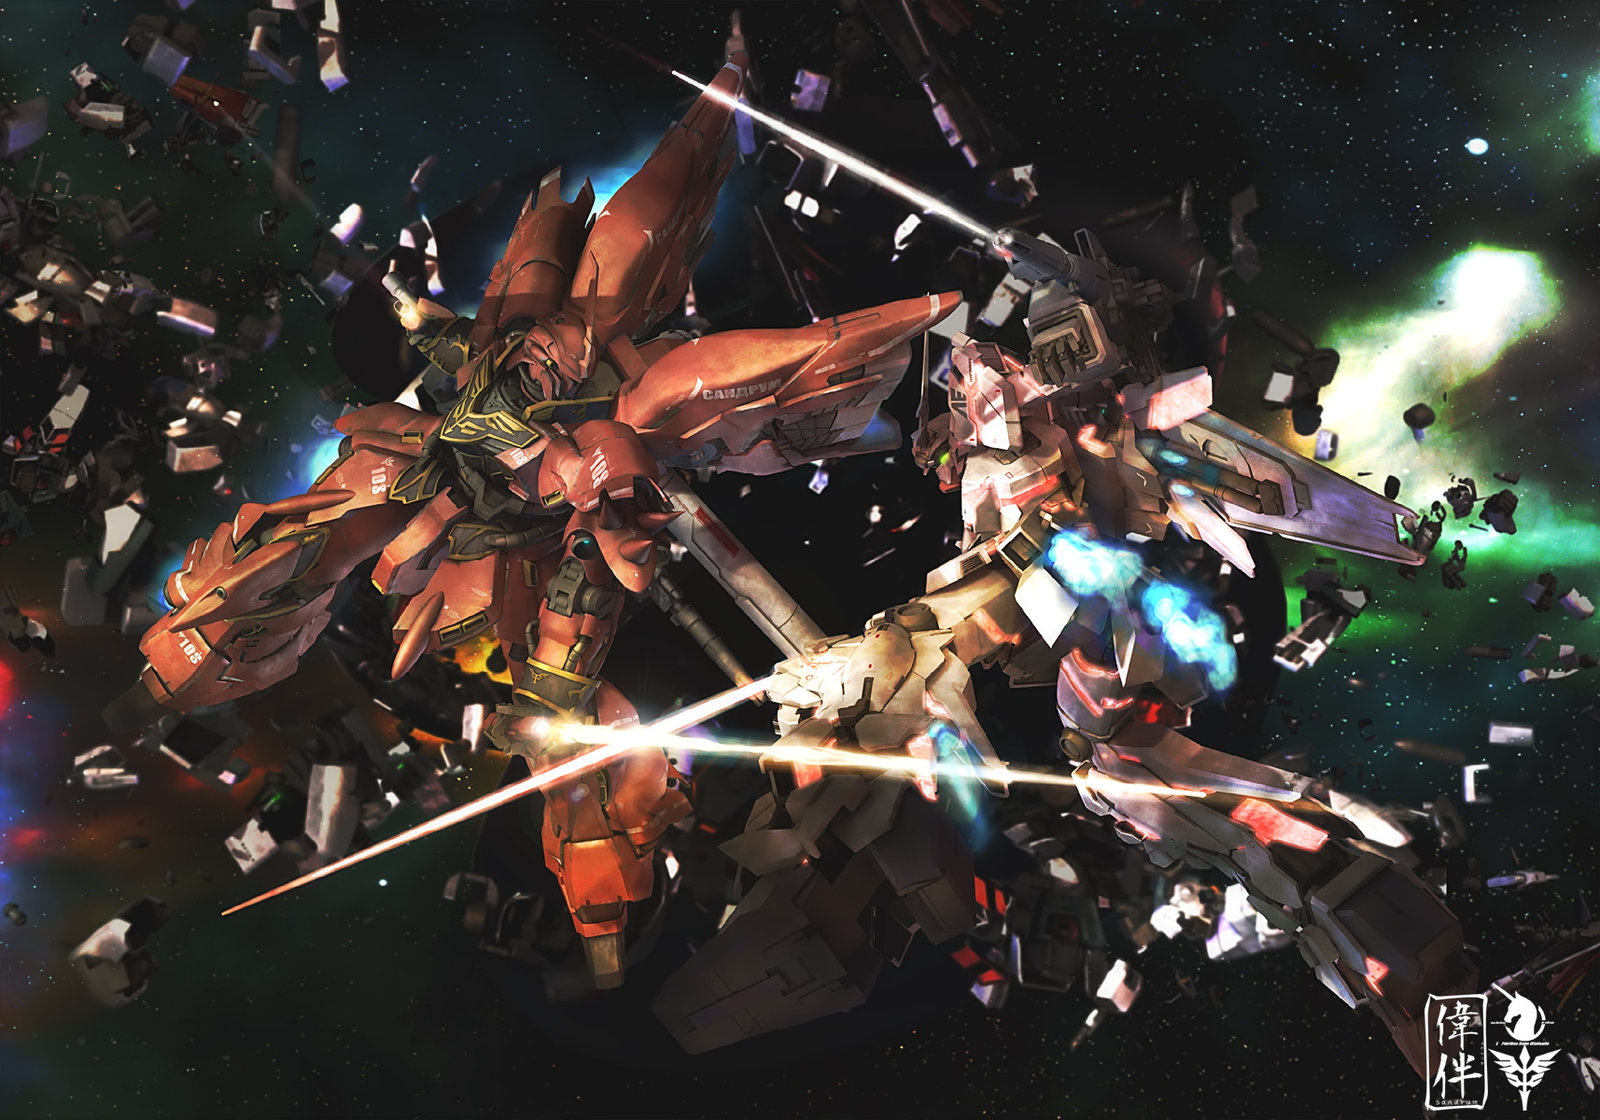 Armored Devil 歴代ガンダム総出撃 壁紙 まとめ メカ Gundam Naver まとめ